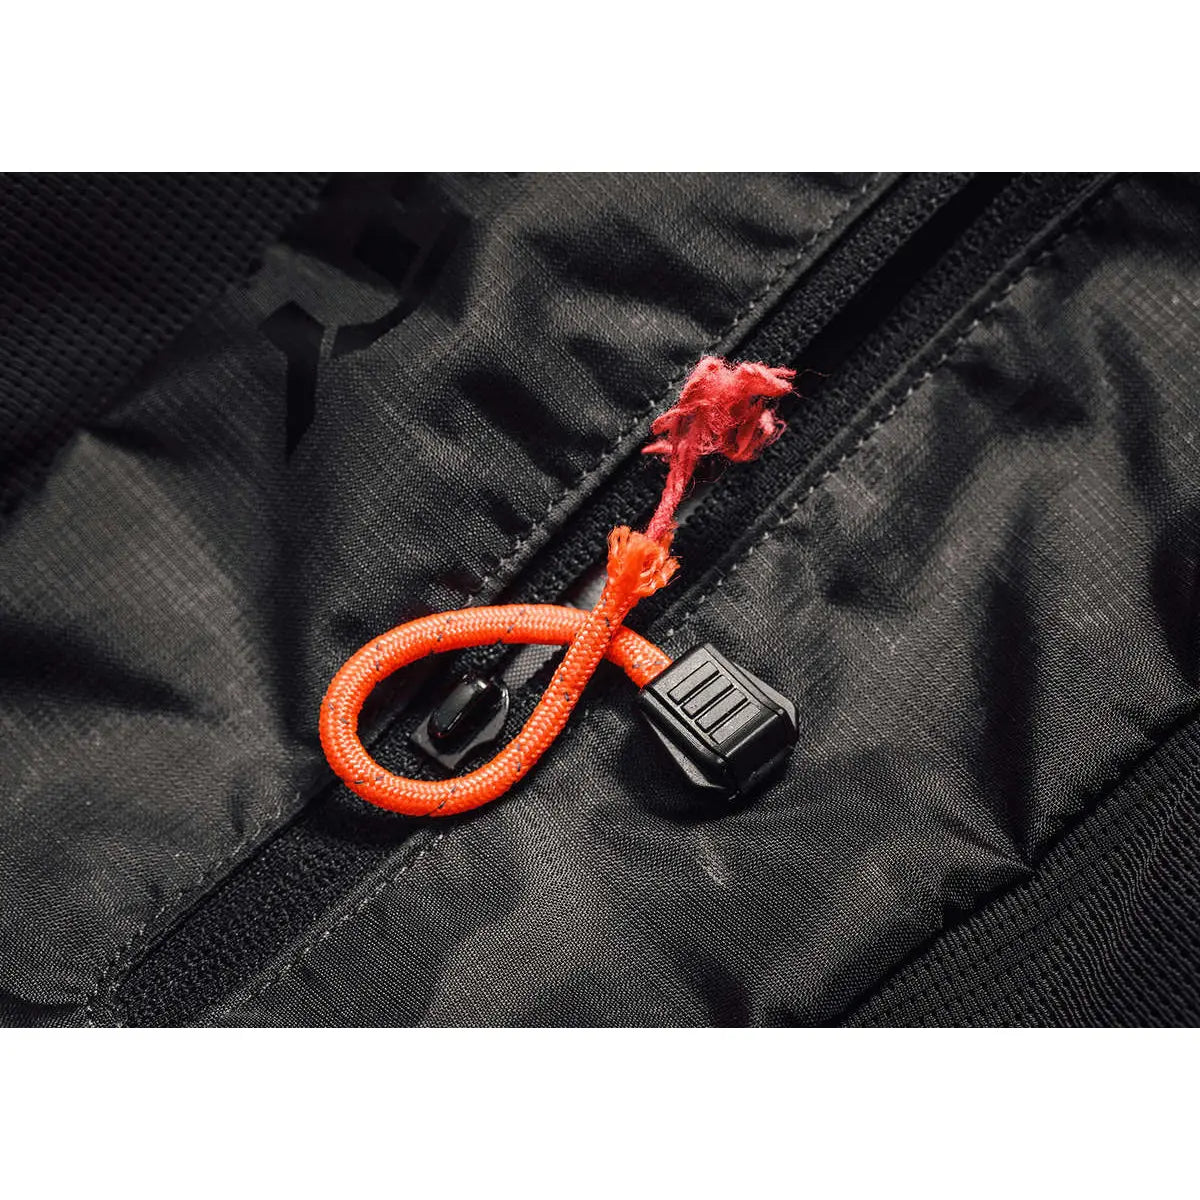 Exotac TinderZIP Emergency Tinder Zipper Pull 5-Pack Exotac